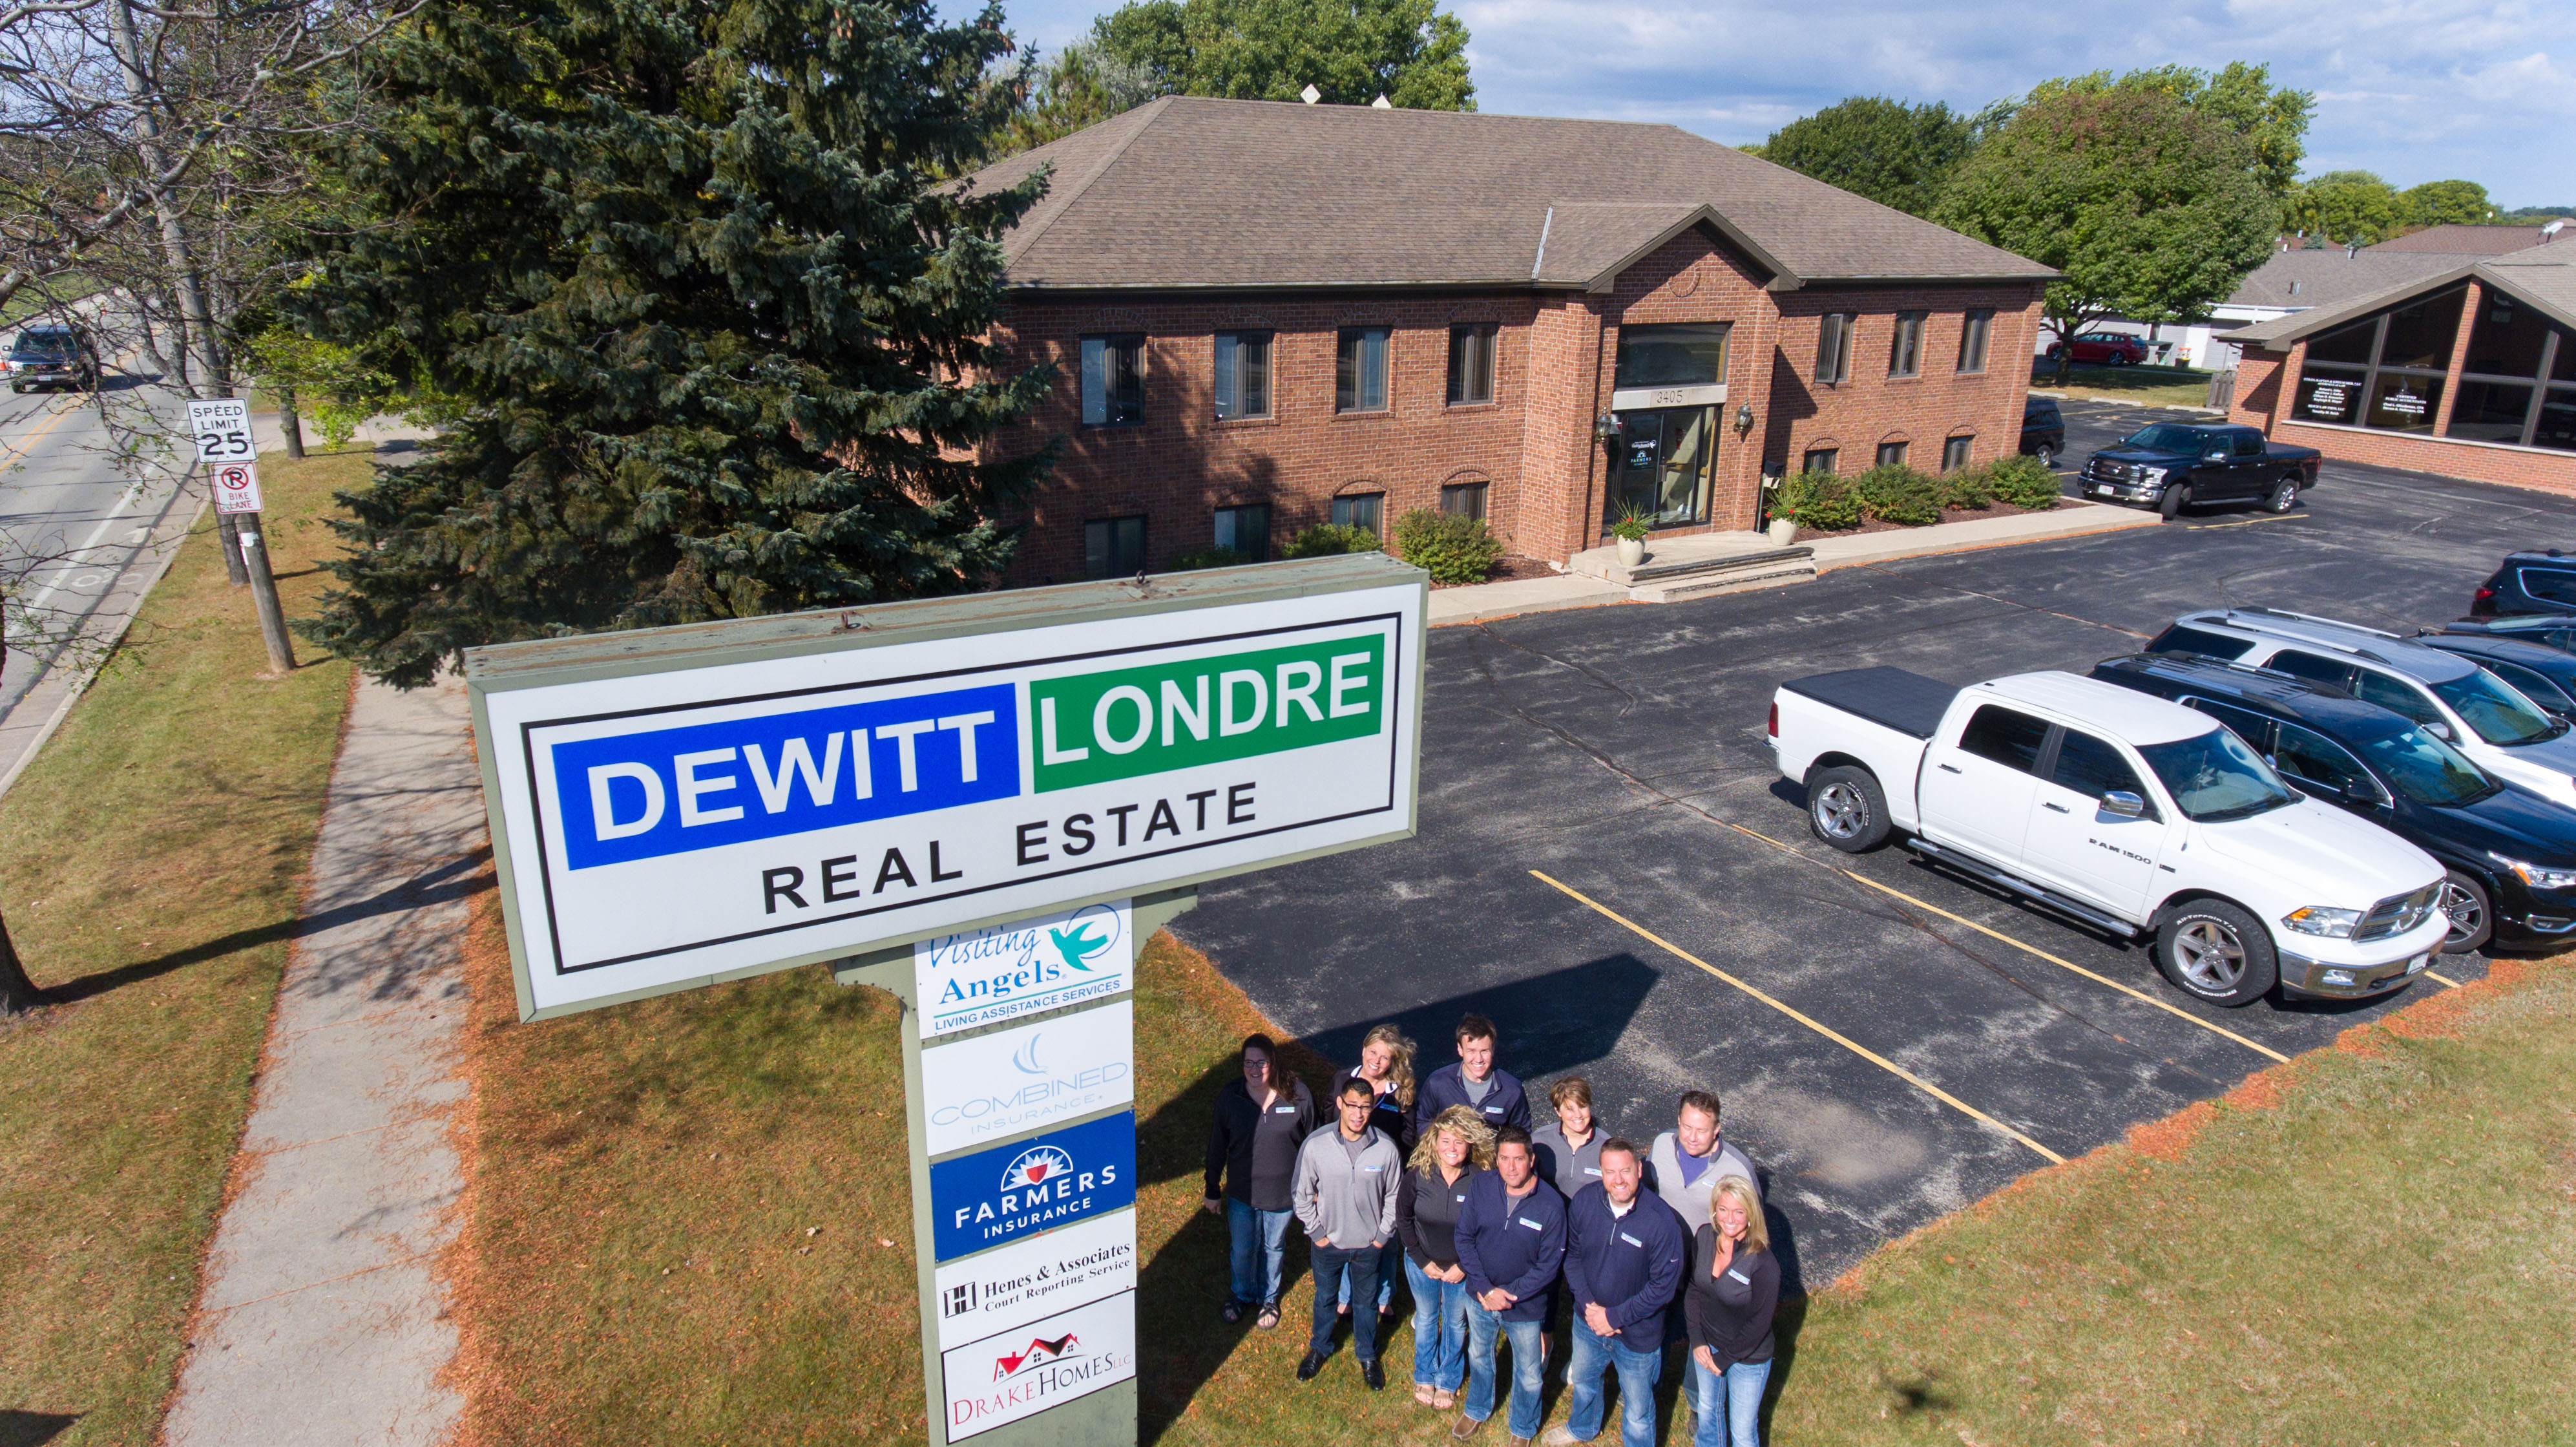 DeWitt Londre LLC